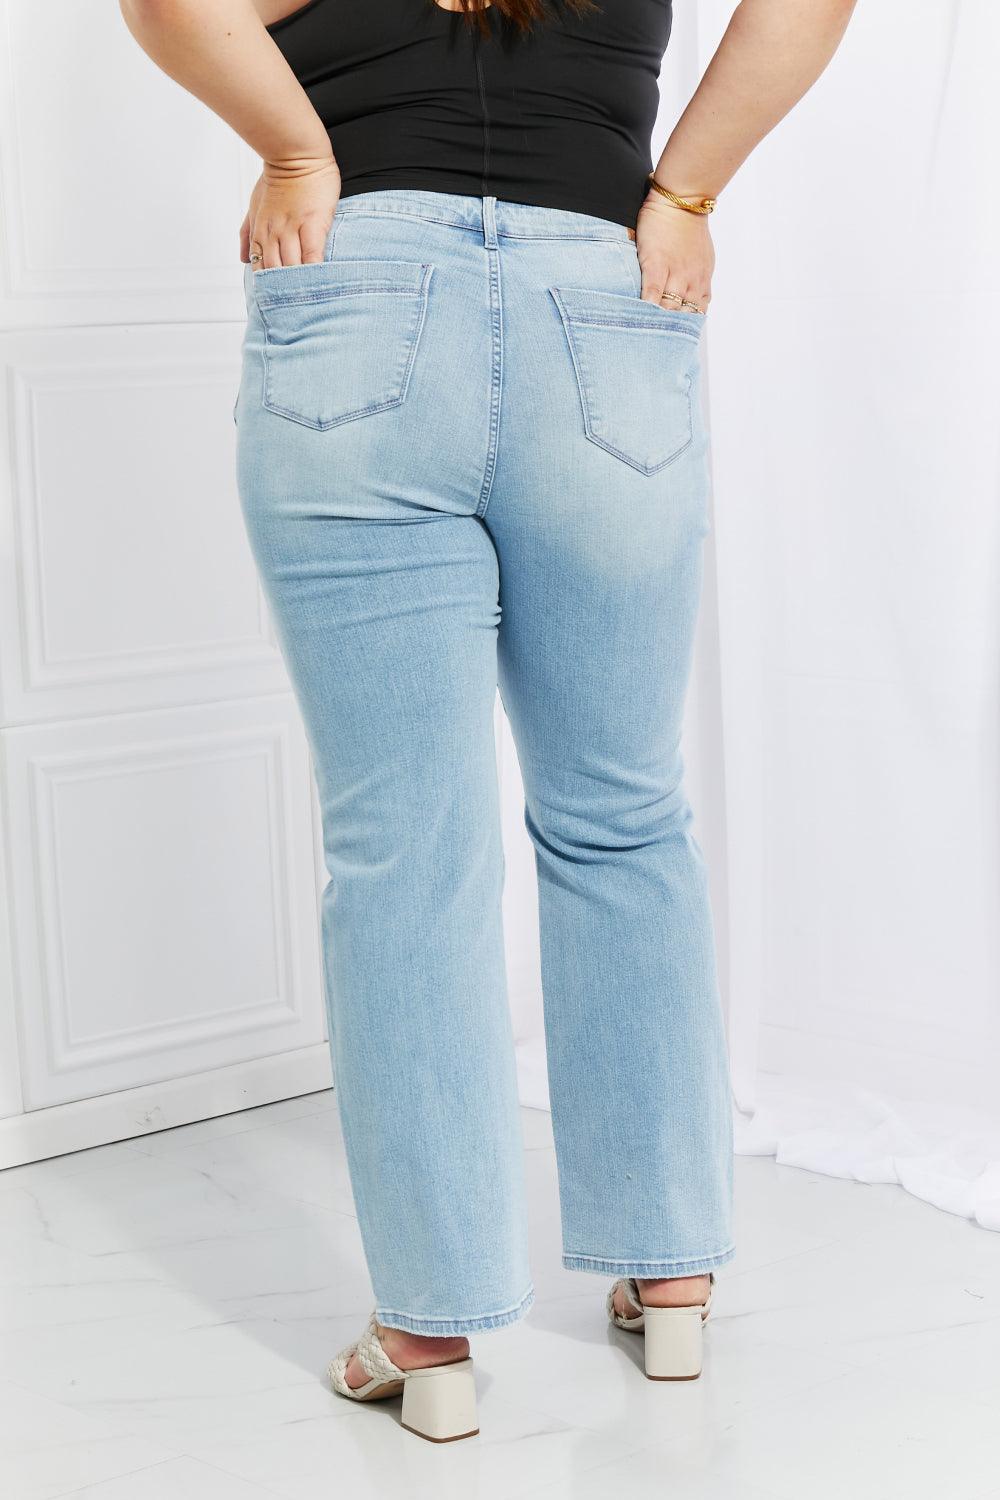 Judy Blue Harper Full Size High Waist Wide Leg Jeans - The Fiery Jasmine